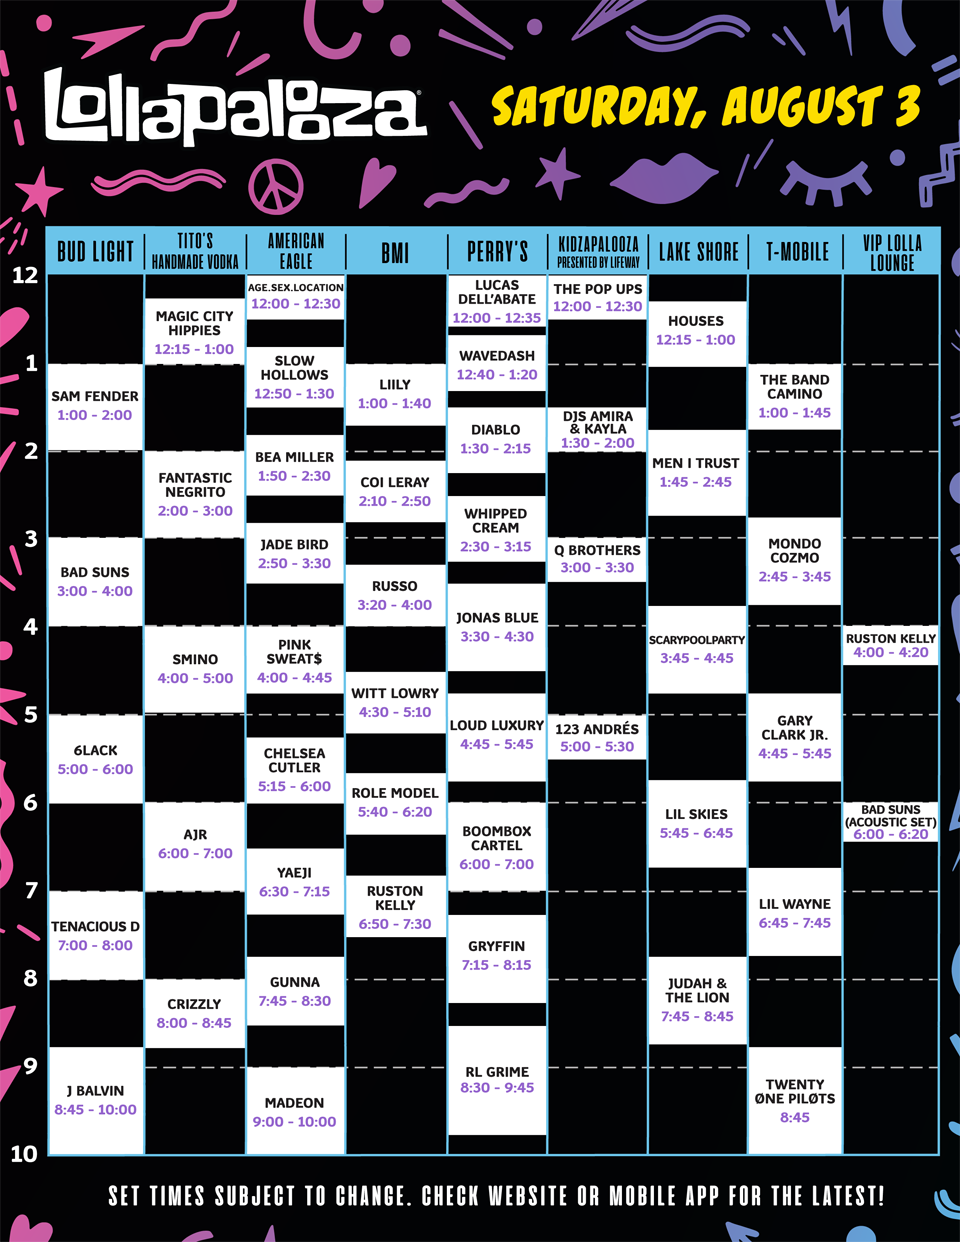 Lollapalooza 2019 schedule